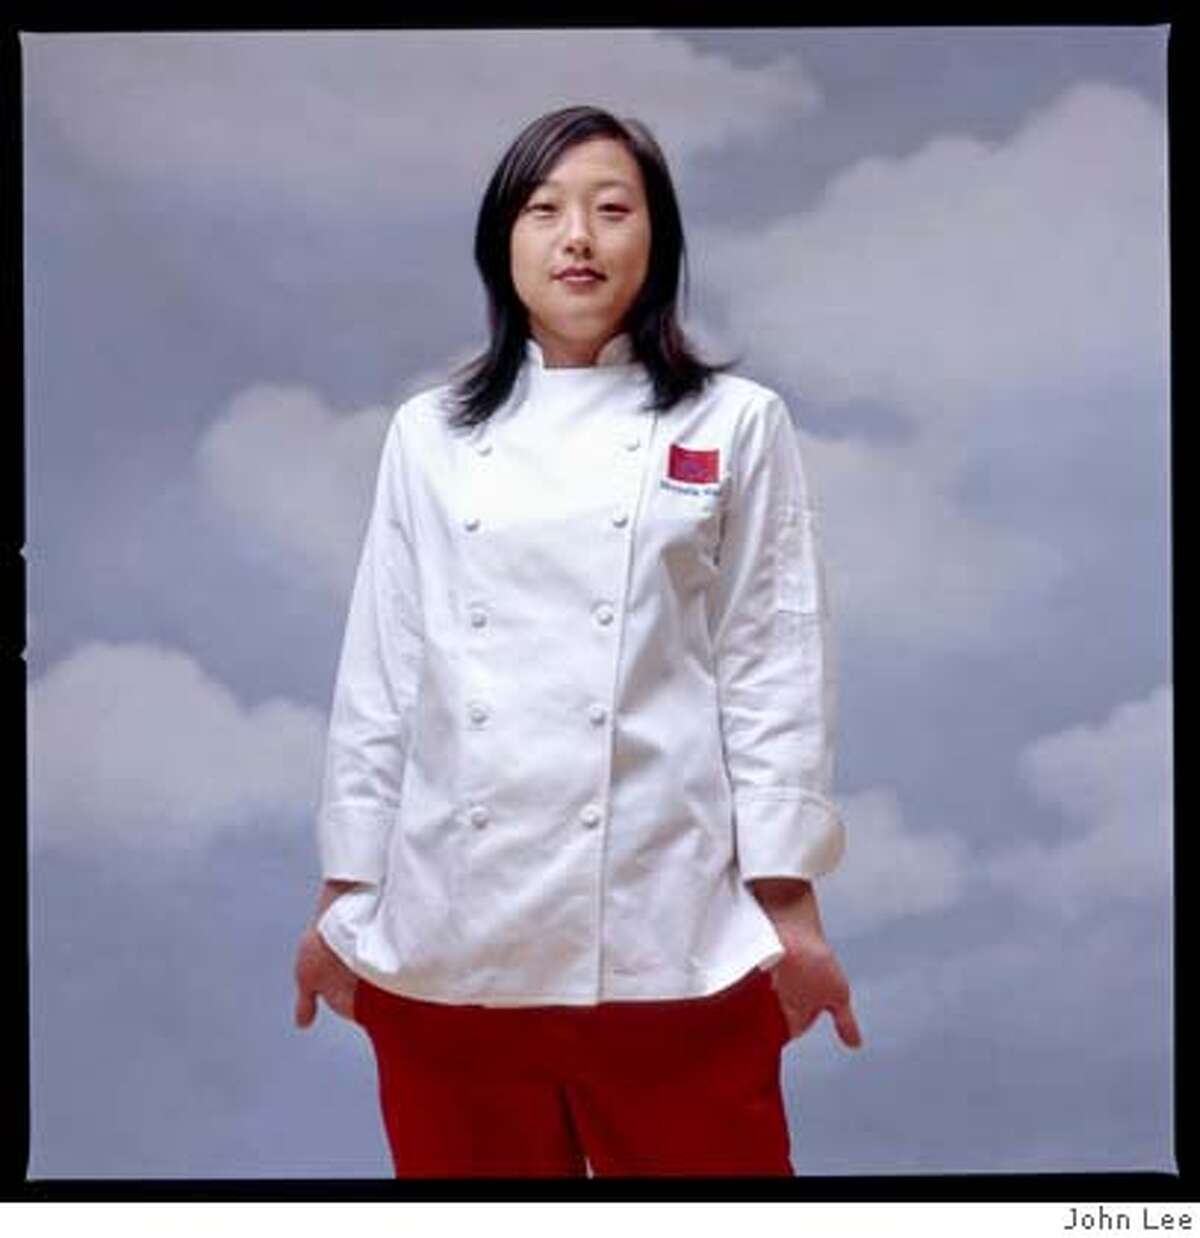 Michelle Mah, Executive Chef at Ponzu. Portrait by John Lee